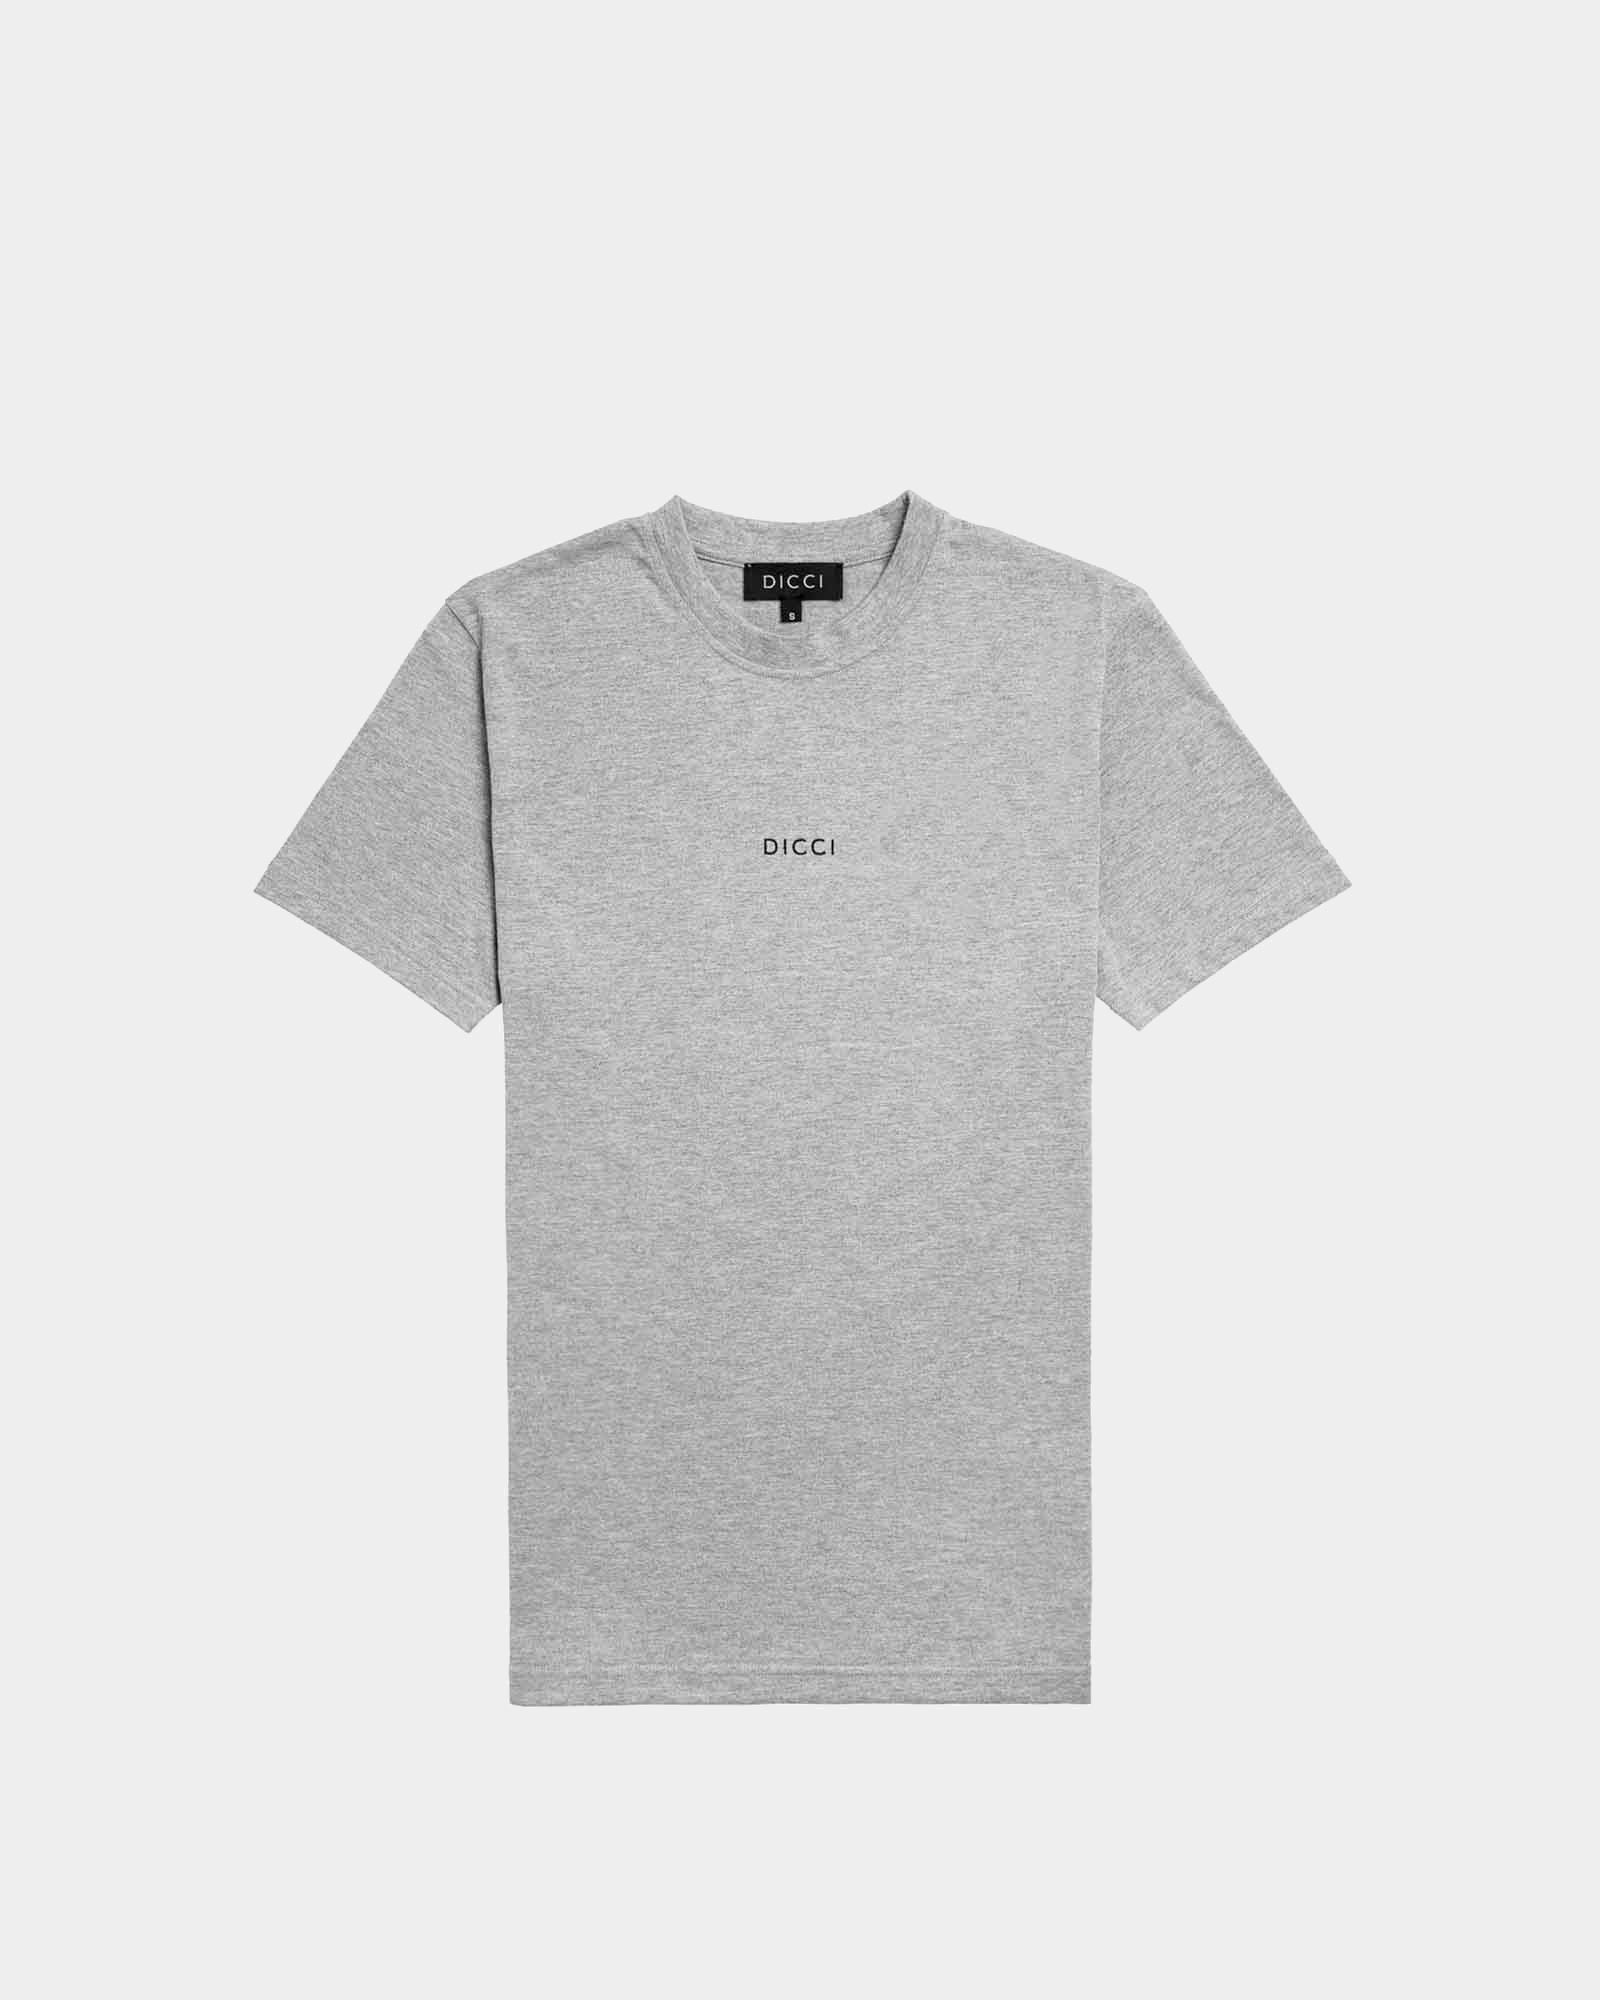 Basic Grey Slim Fit T-shirt - Cotton T-shirts - Unissex Clothing Online - Dicci